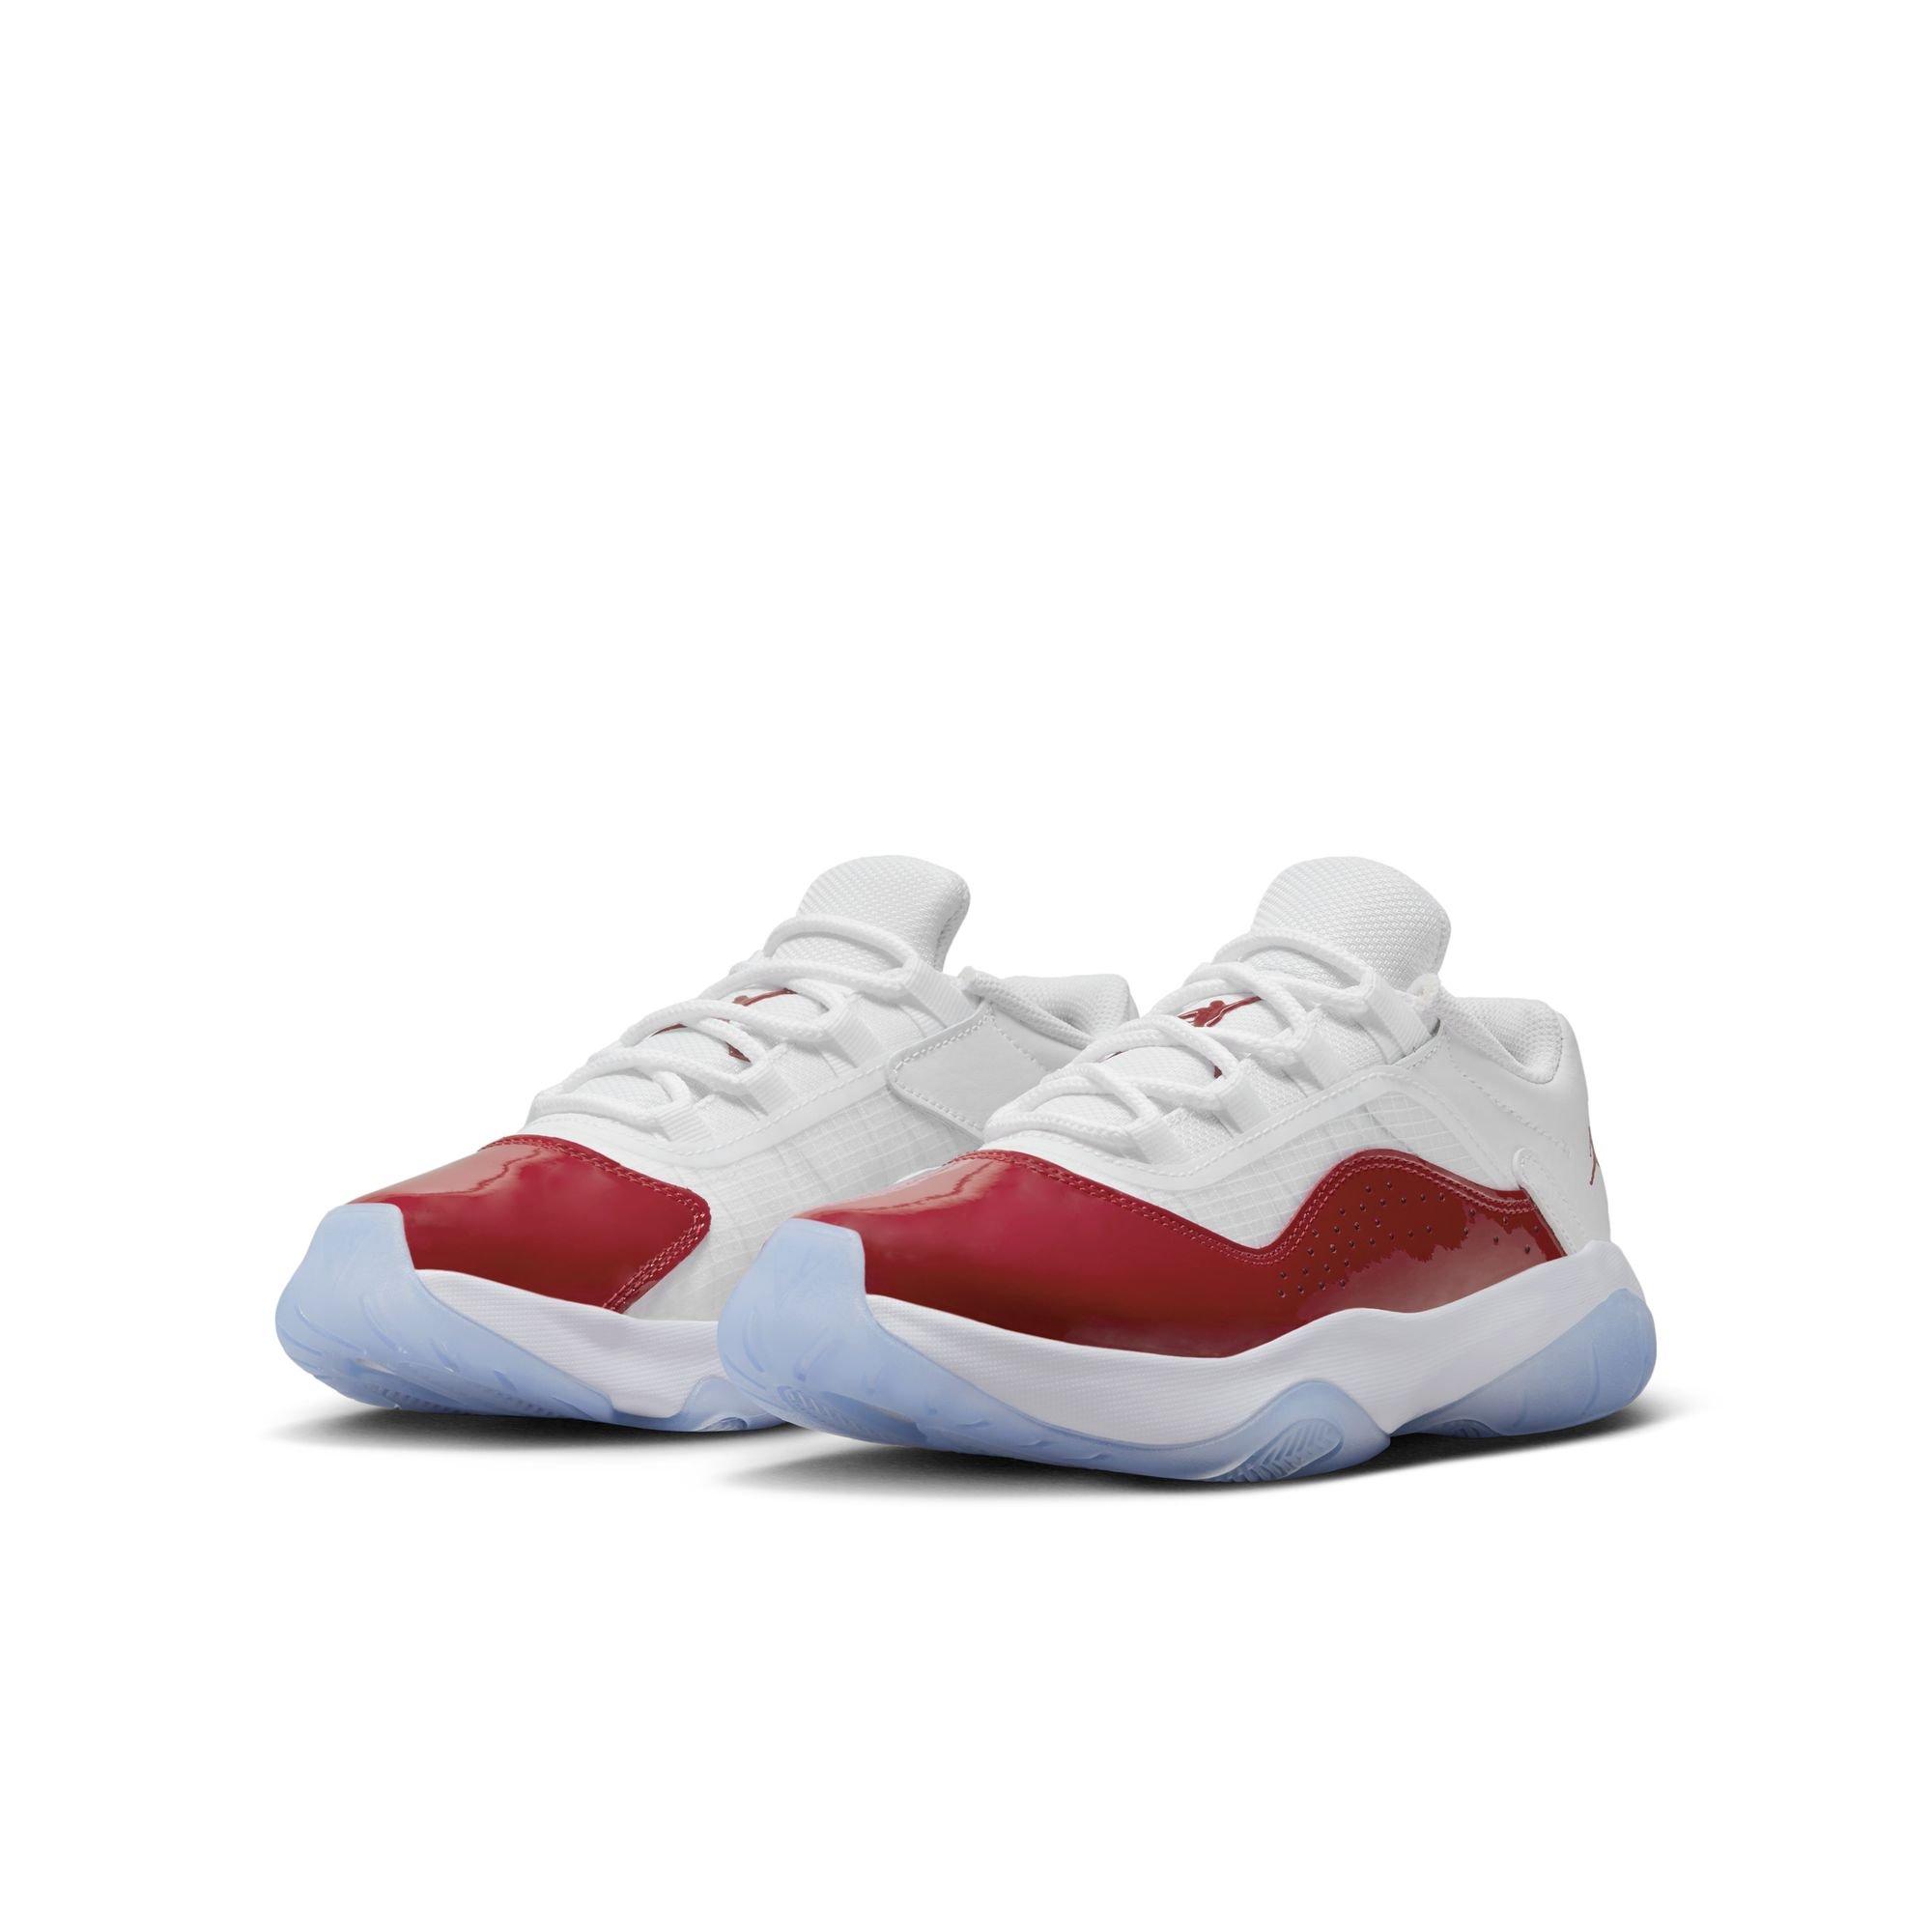 Jordan 11 Retro Low Black/Gym Red/White Men's Shoe - Hibbett